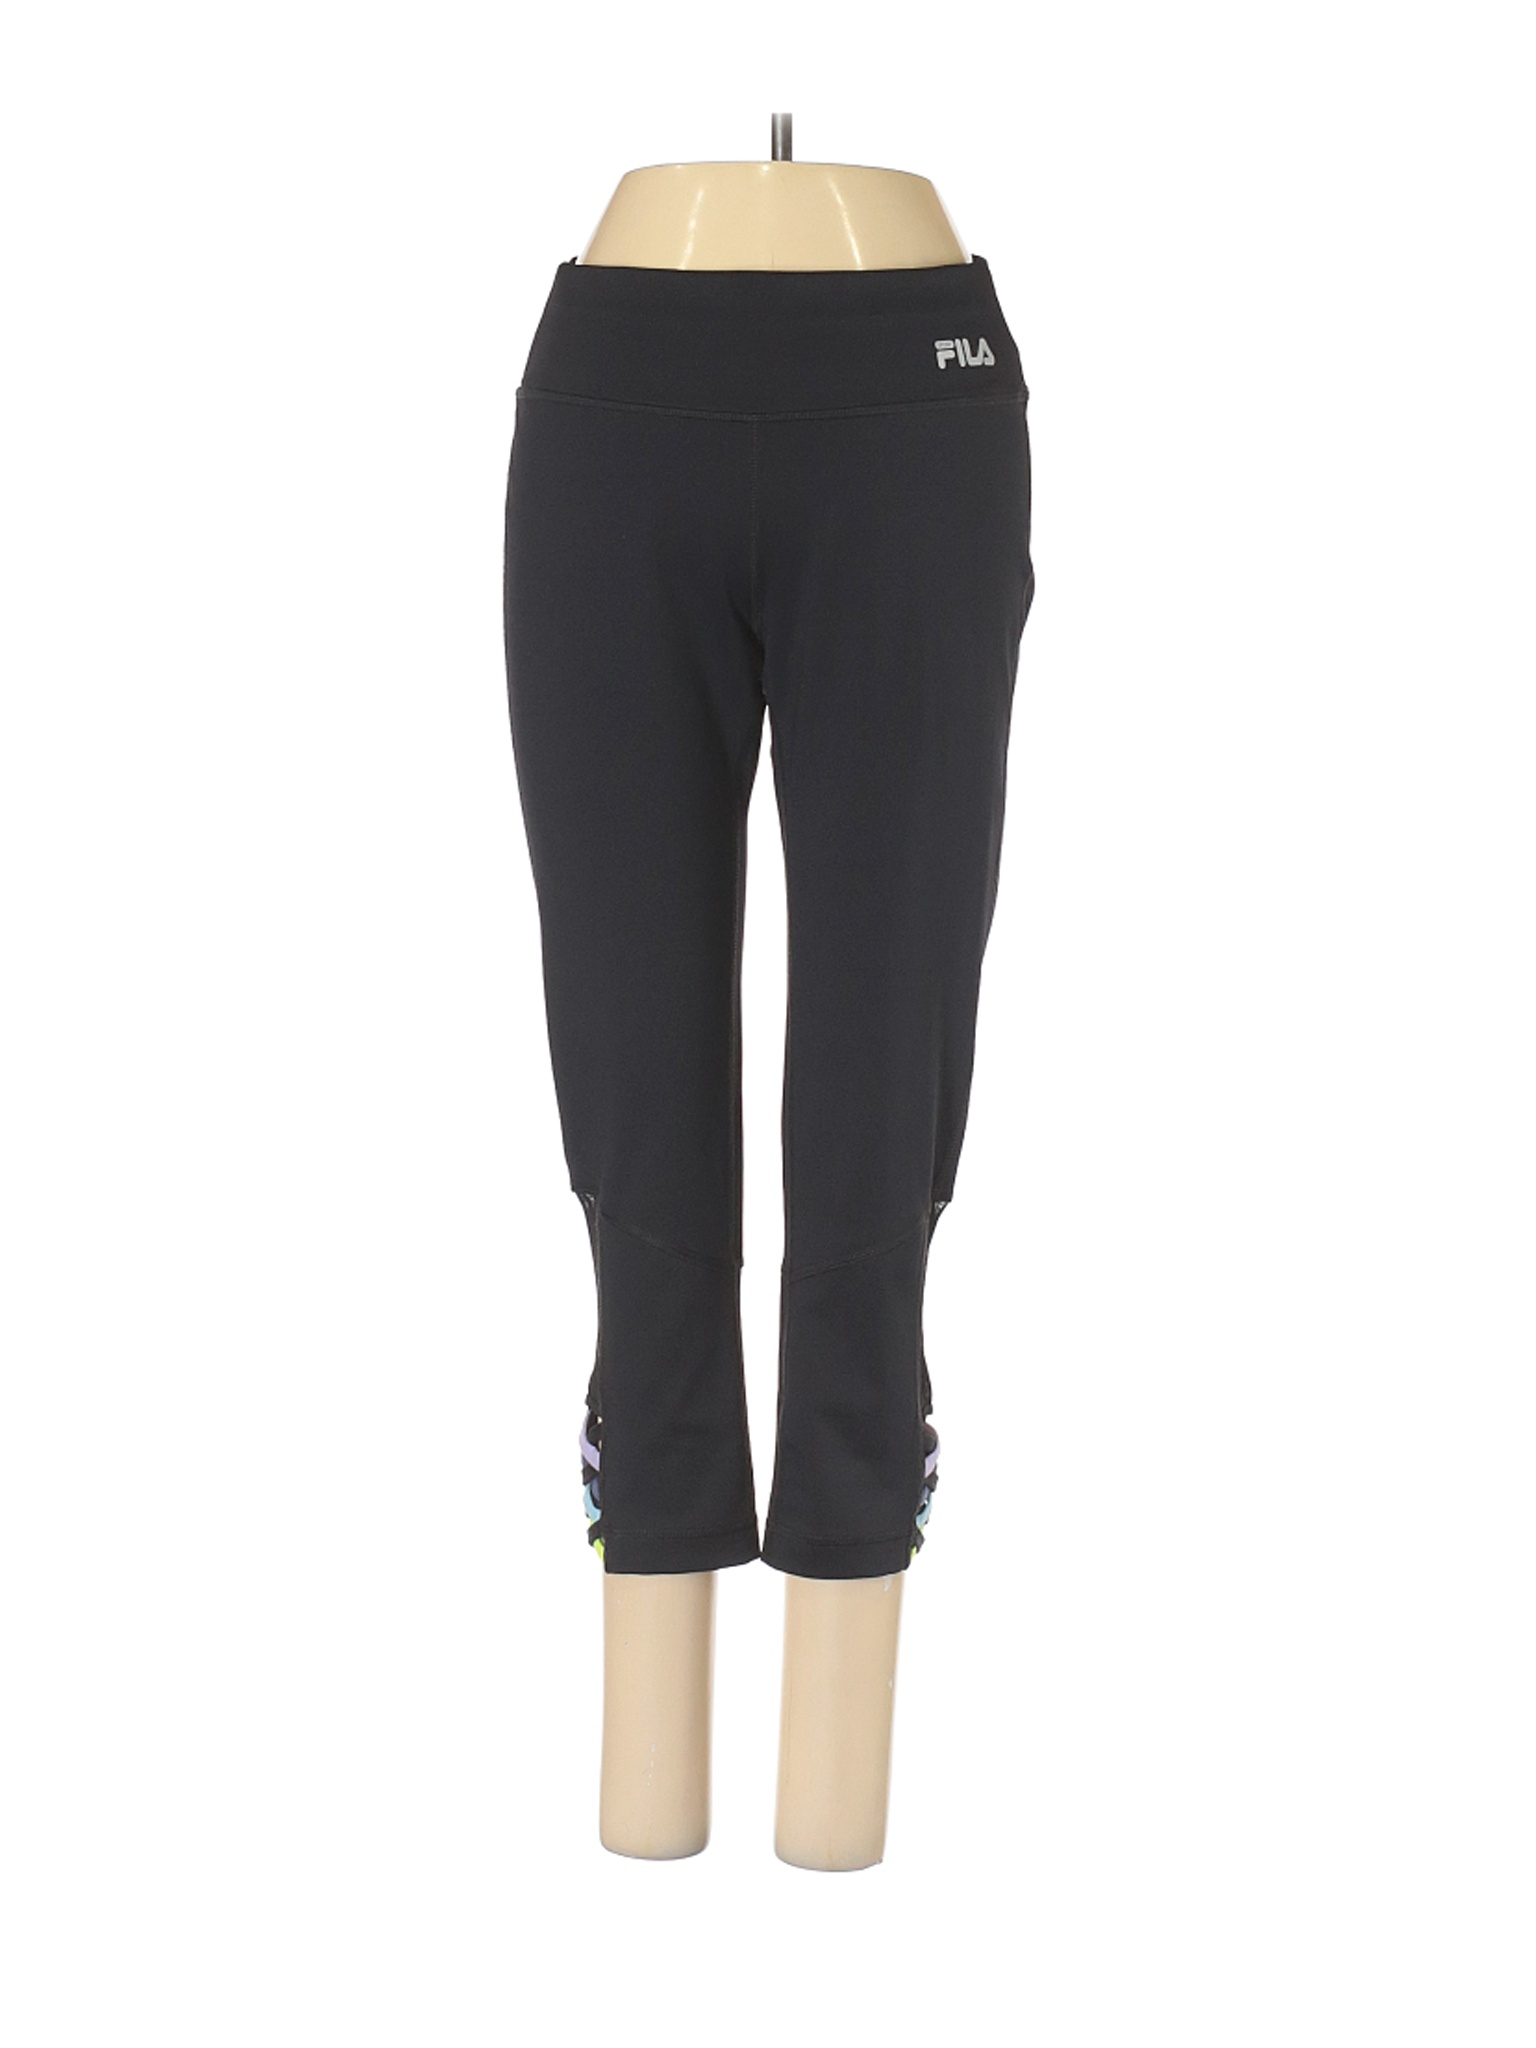 Fila Sport Women Black Active Pants S | eBay